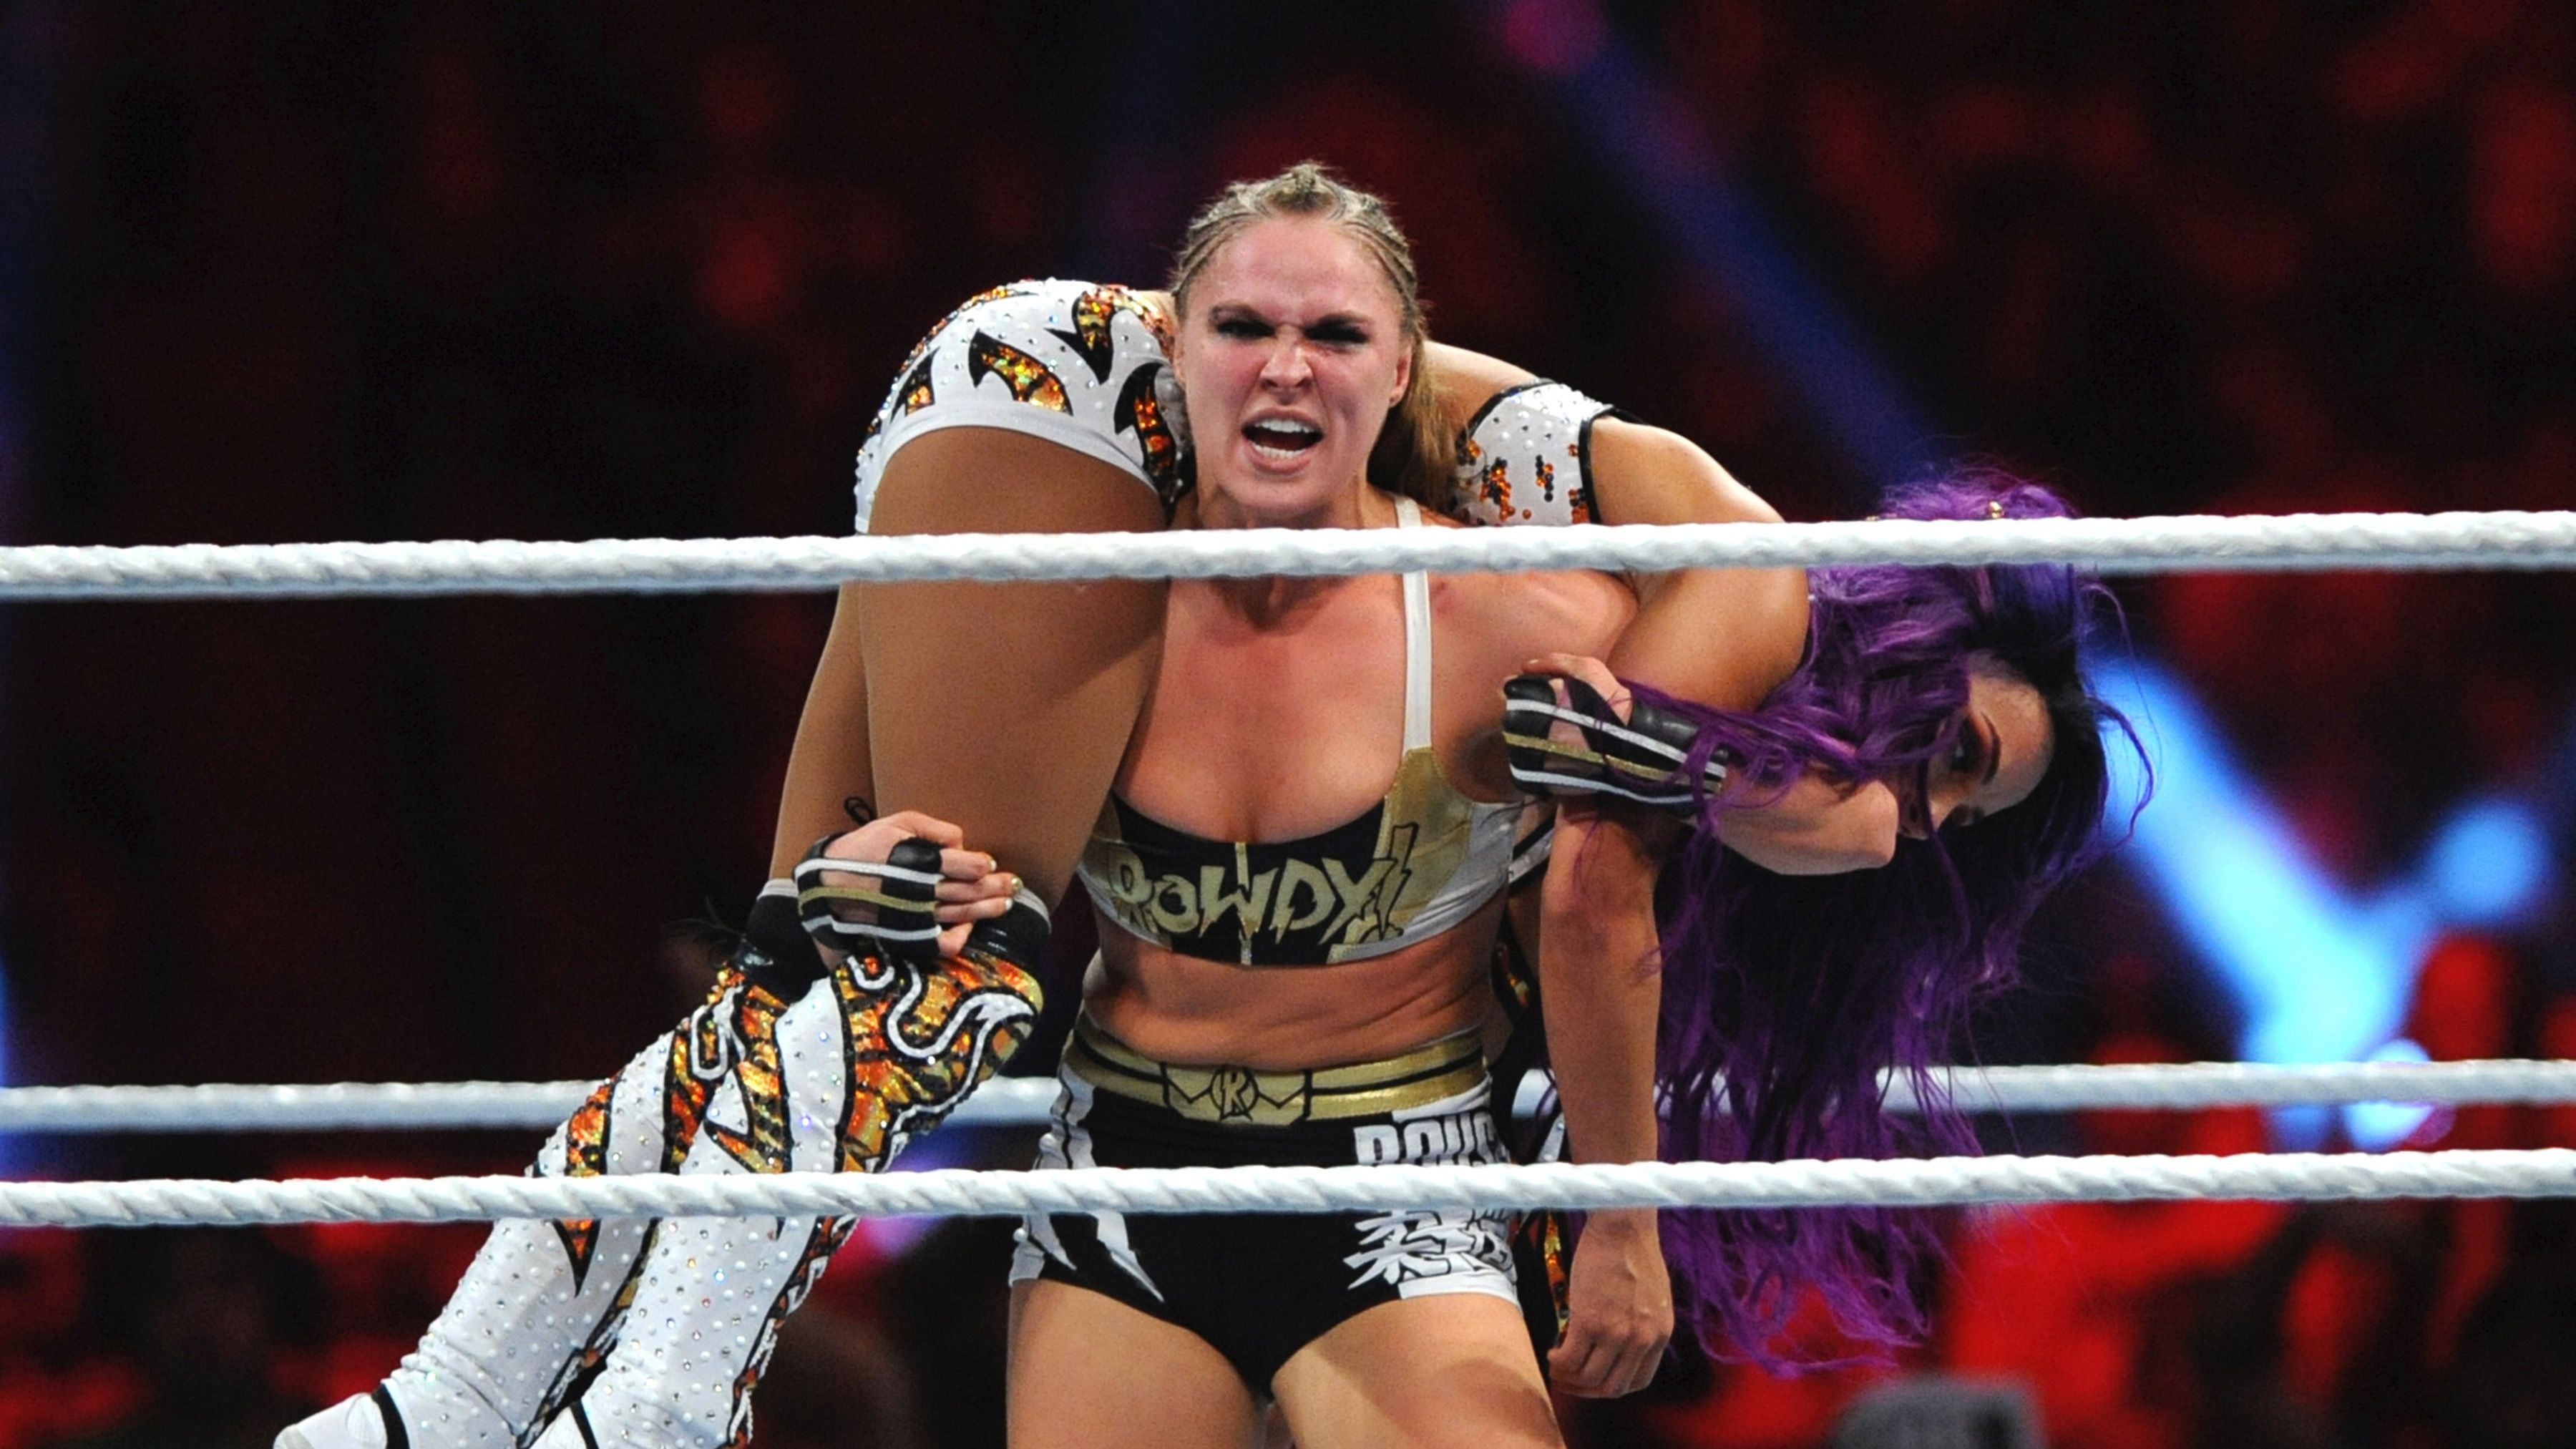 Ronda Rousey vs Sasha Banks